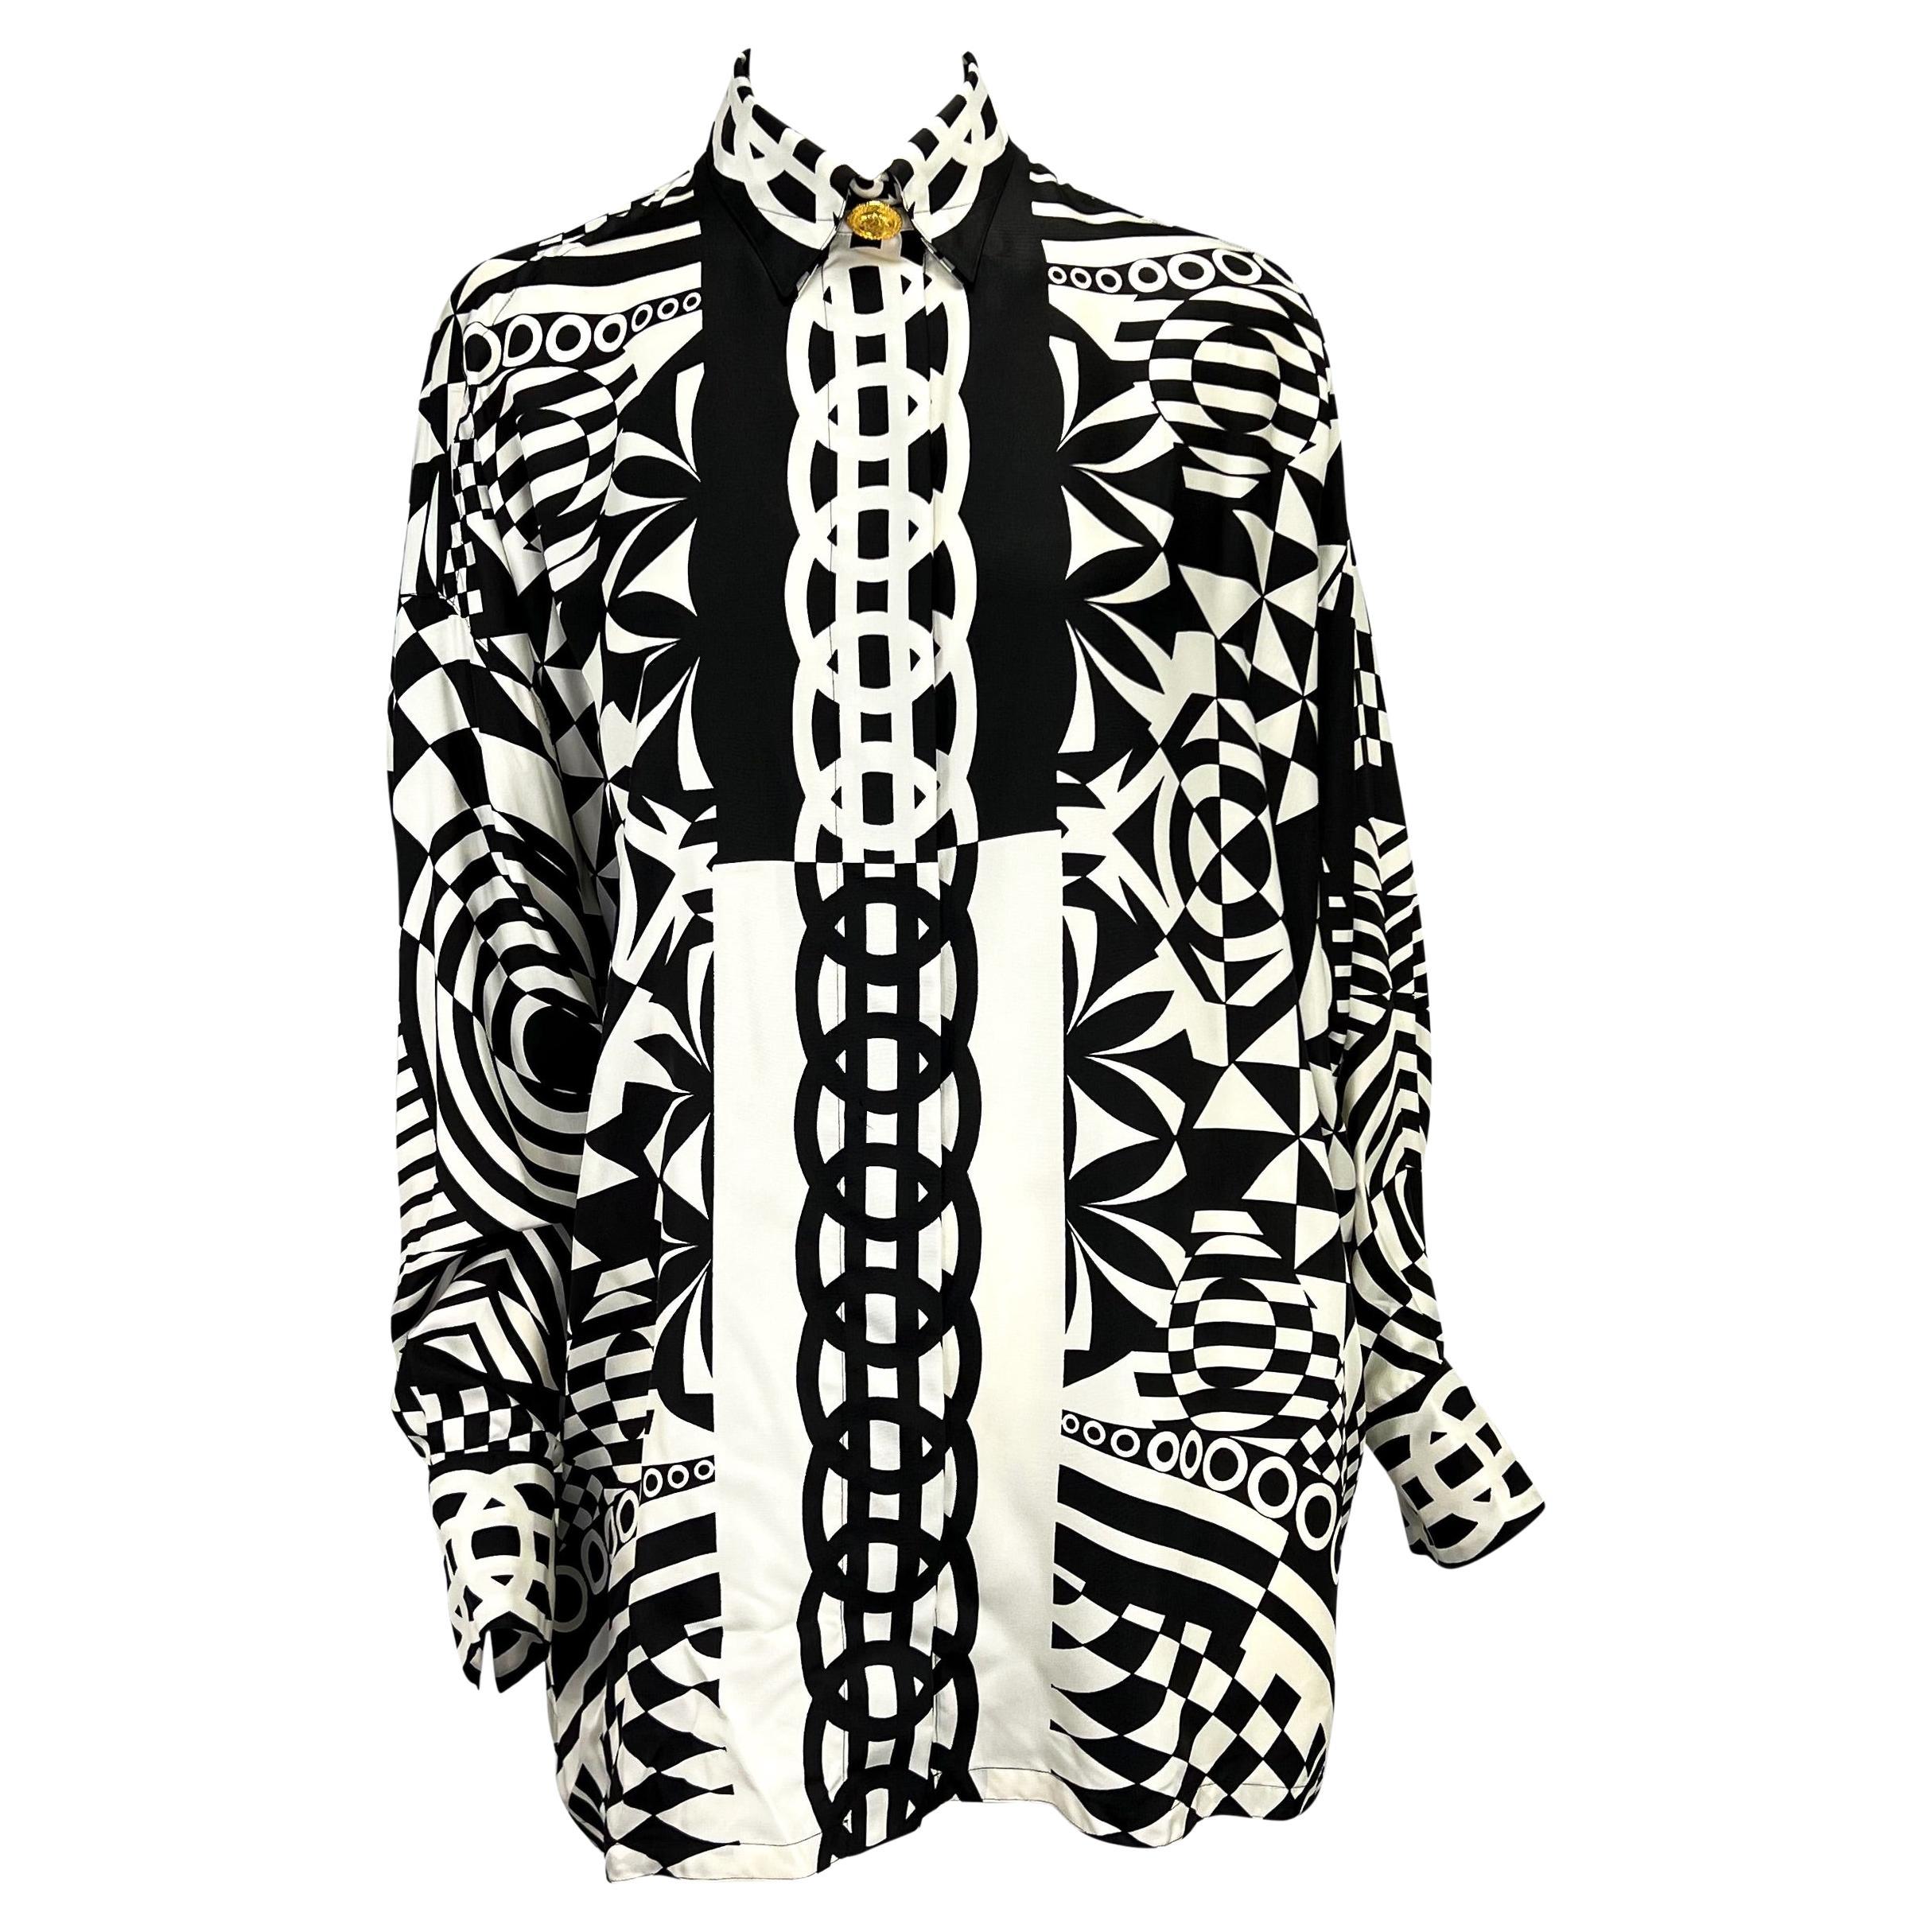 S/S 1992 Gianni Versace Couture Silk Black & White Geometric Print Button Down